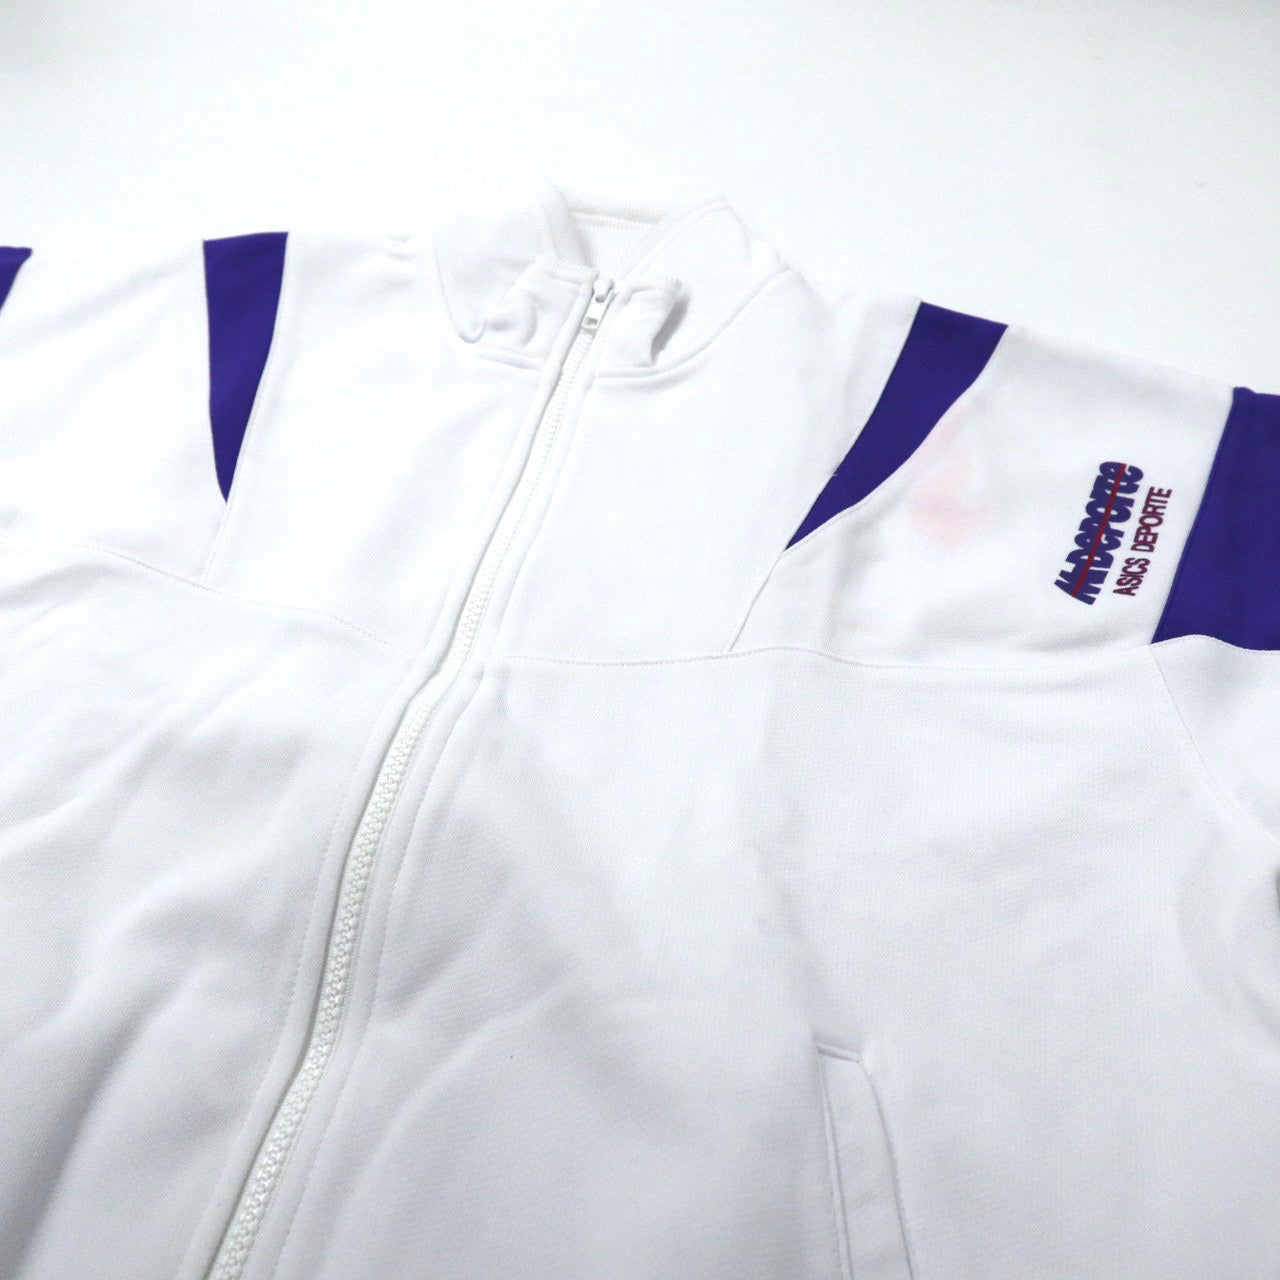 MR DEPORTE (ASICS) Track Jacket LL White polyester 90s Unused